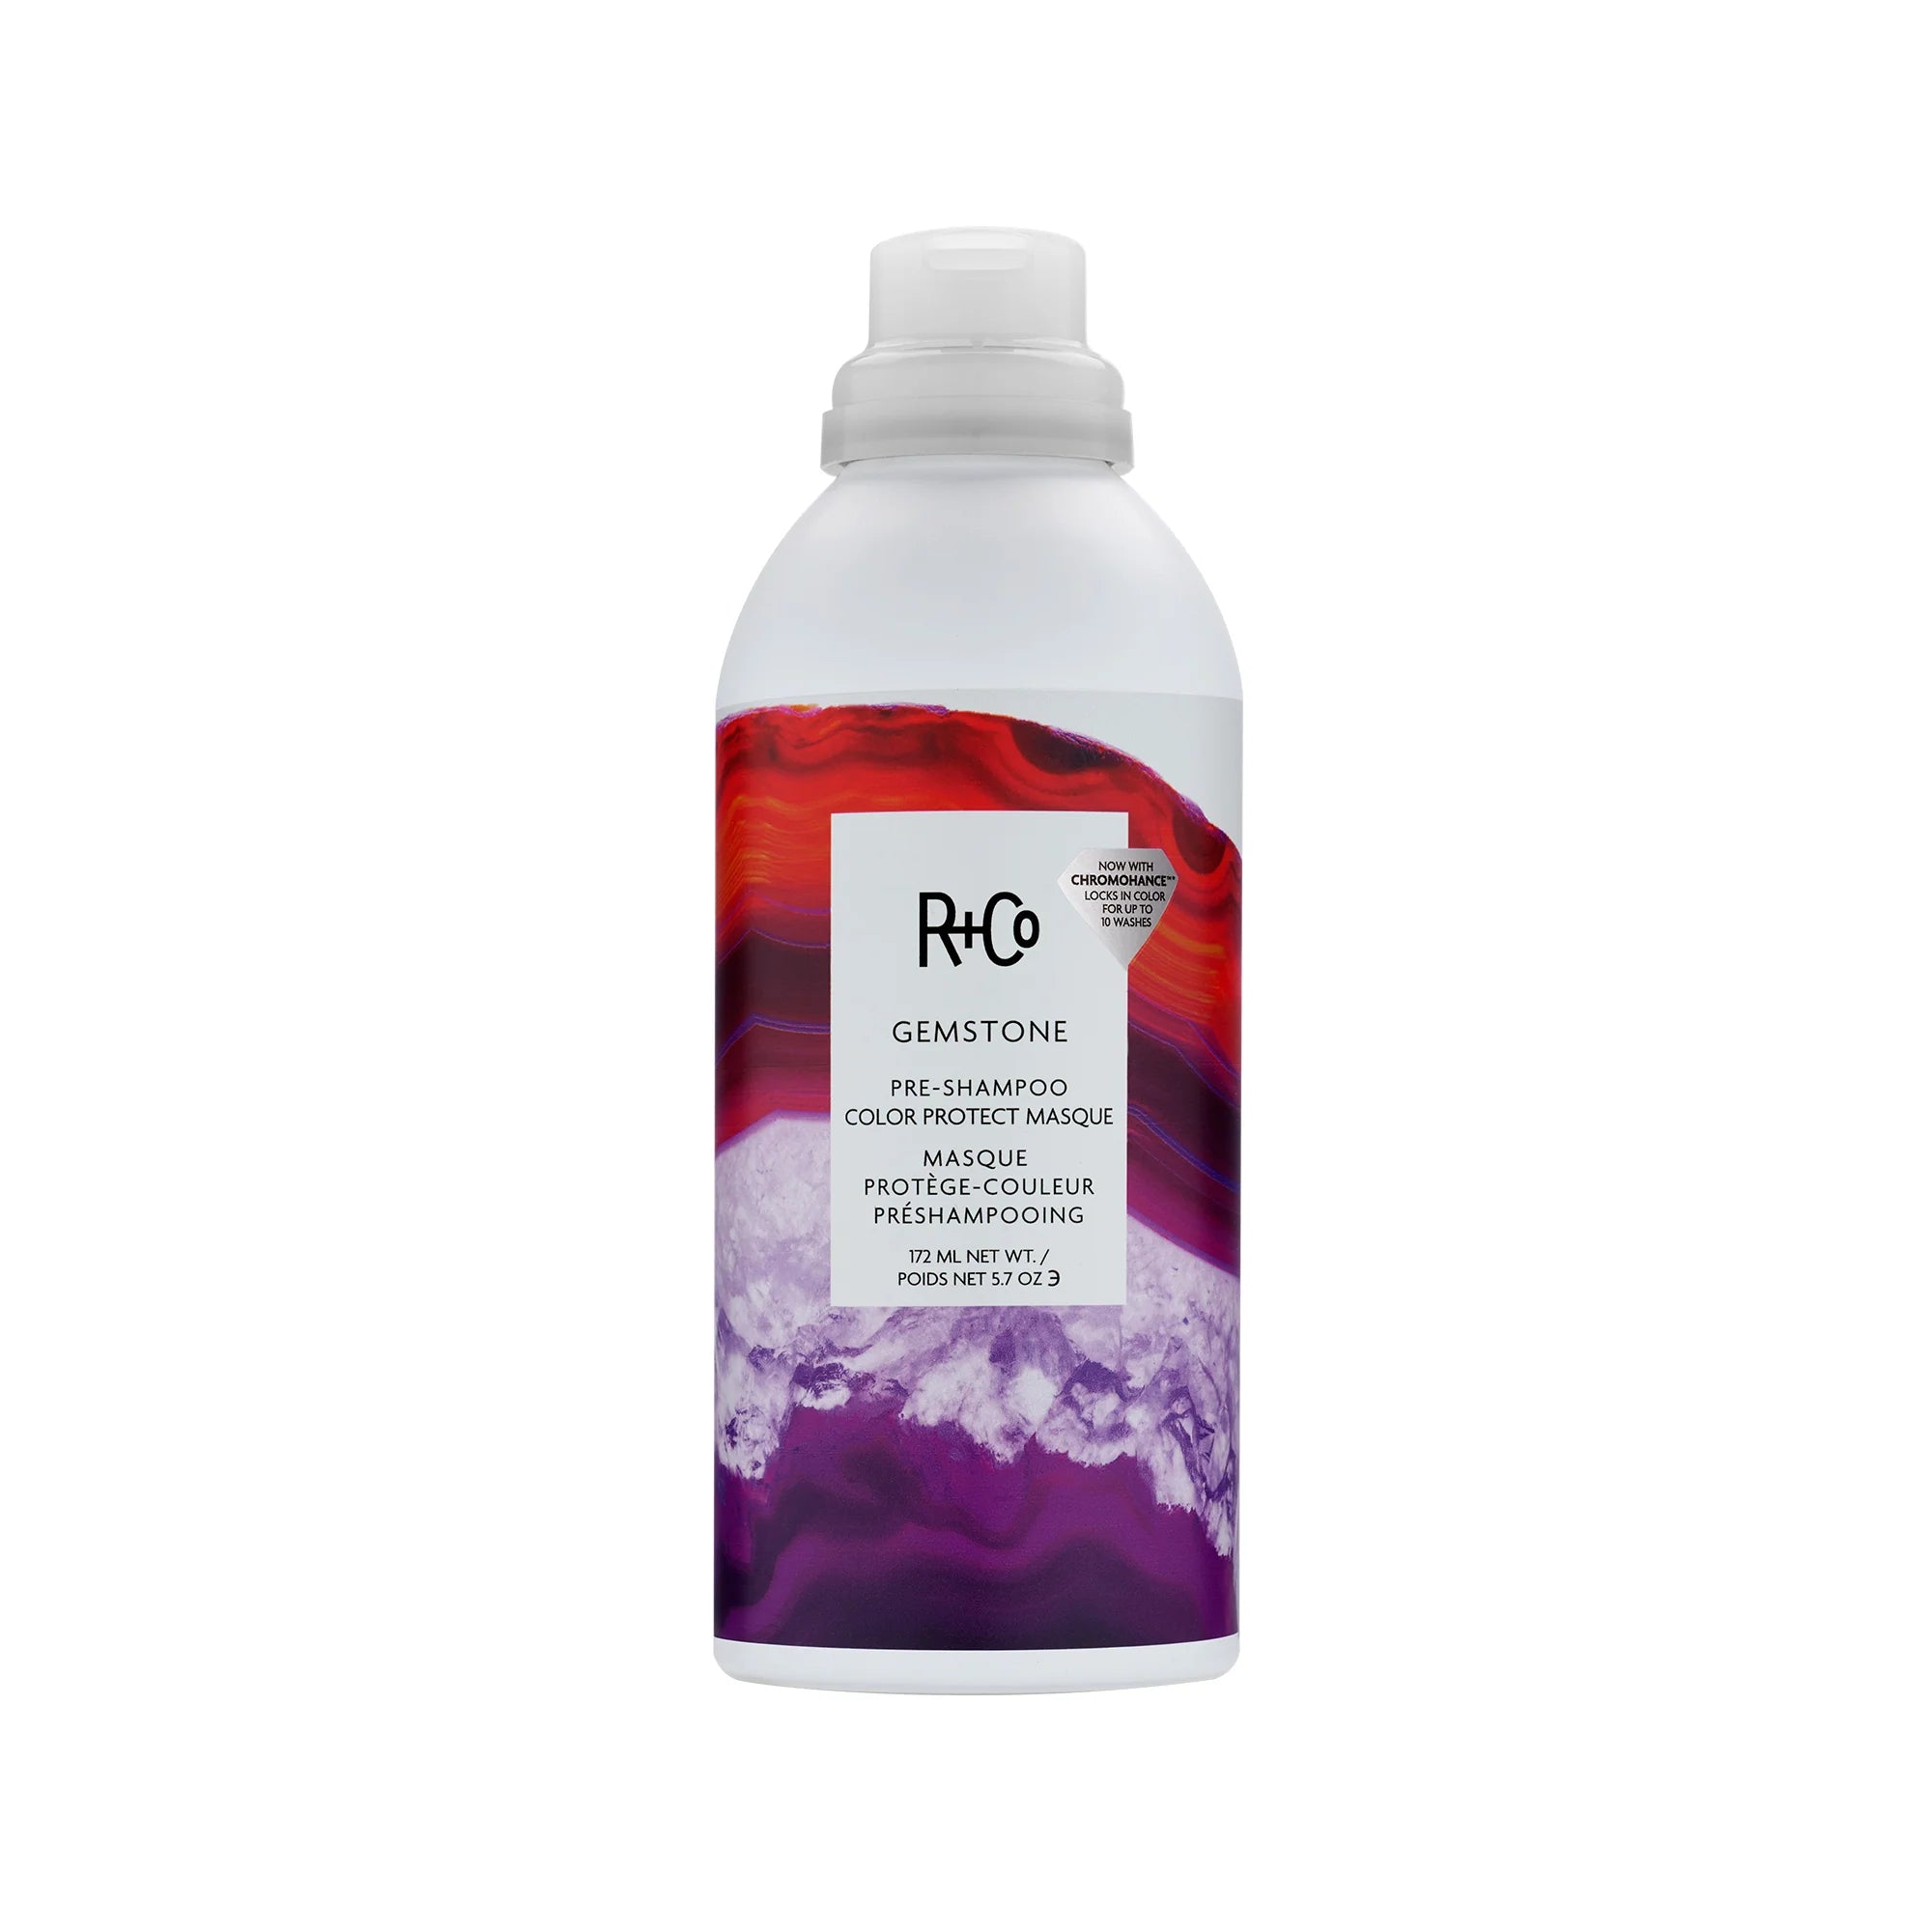 R+Co Gemstone pre-shampoo colour protect masque 172ml